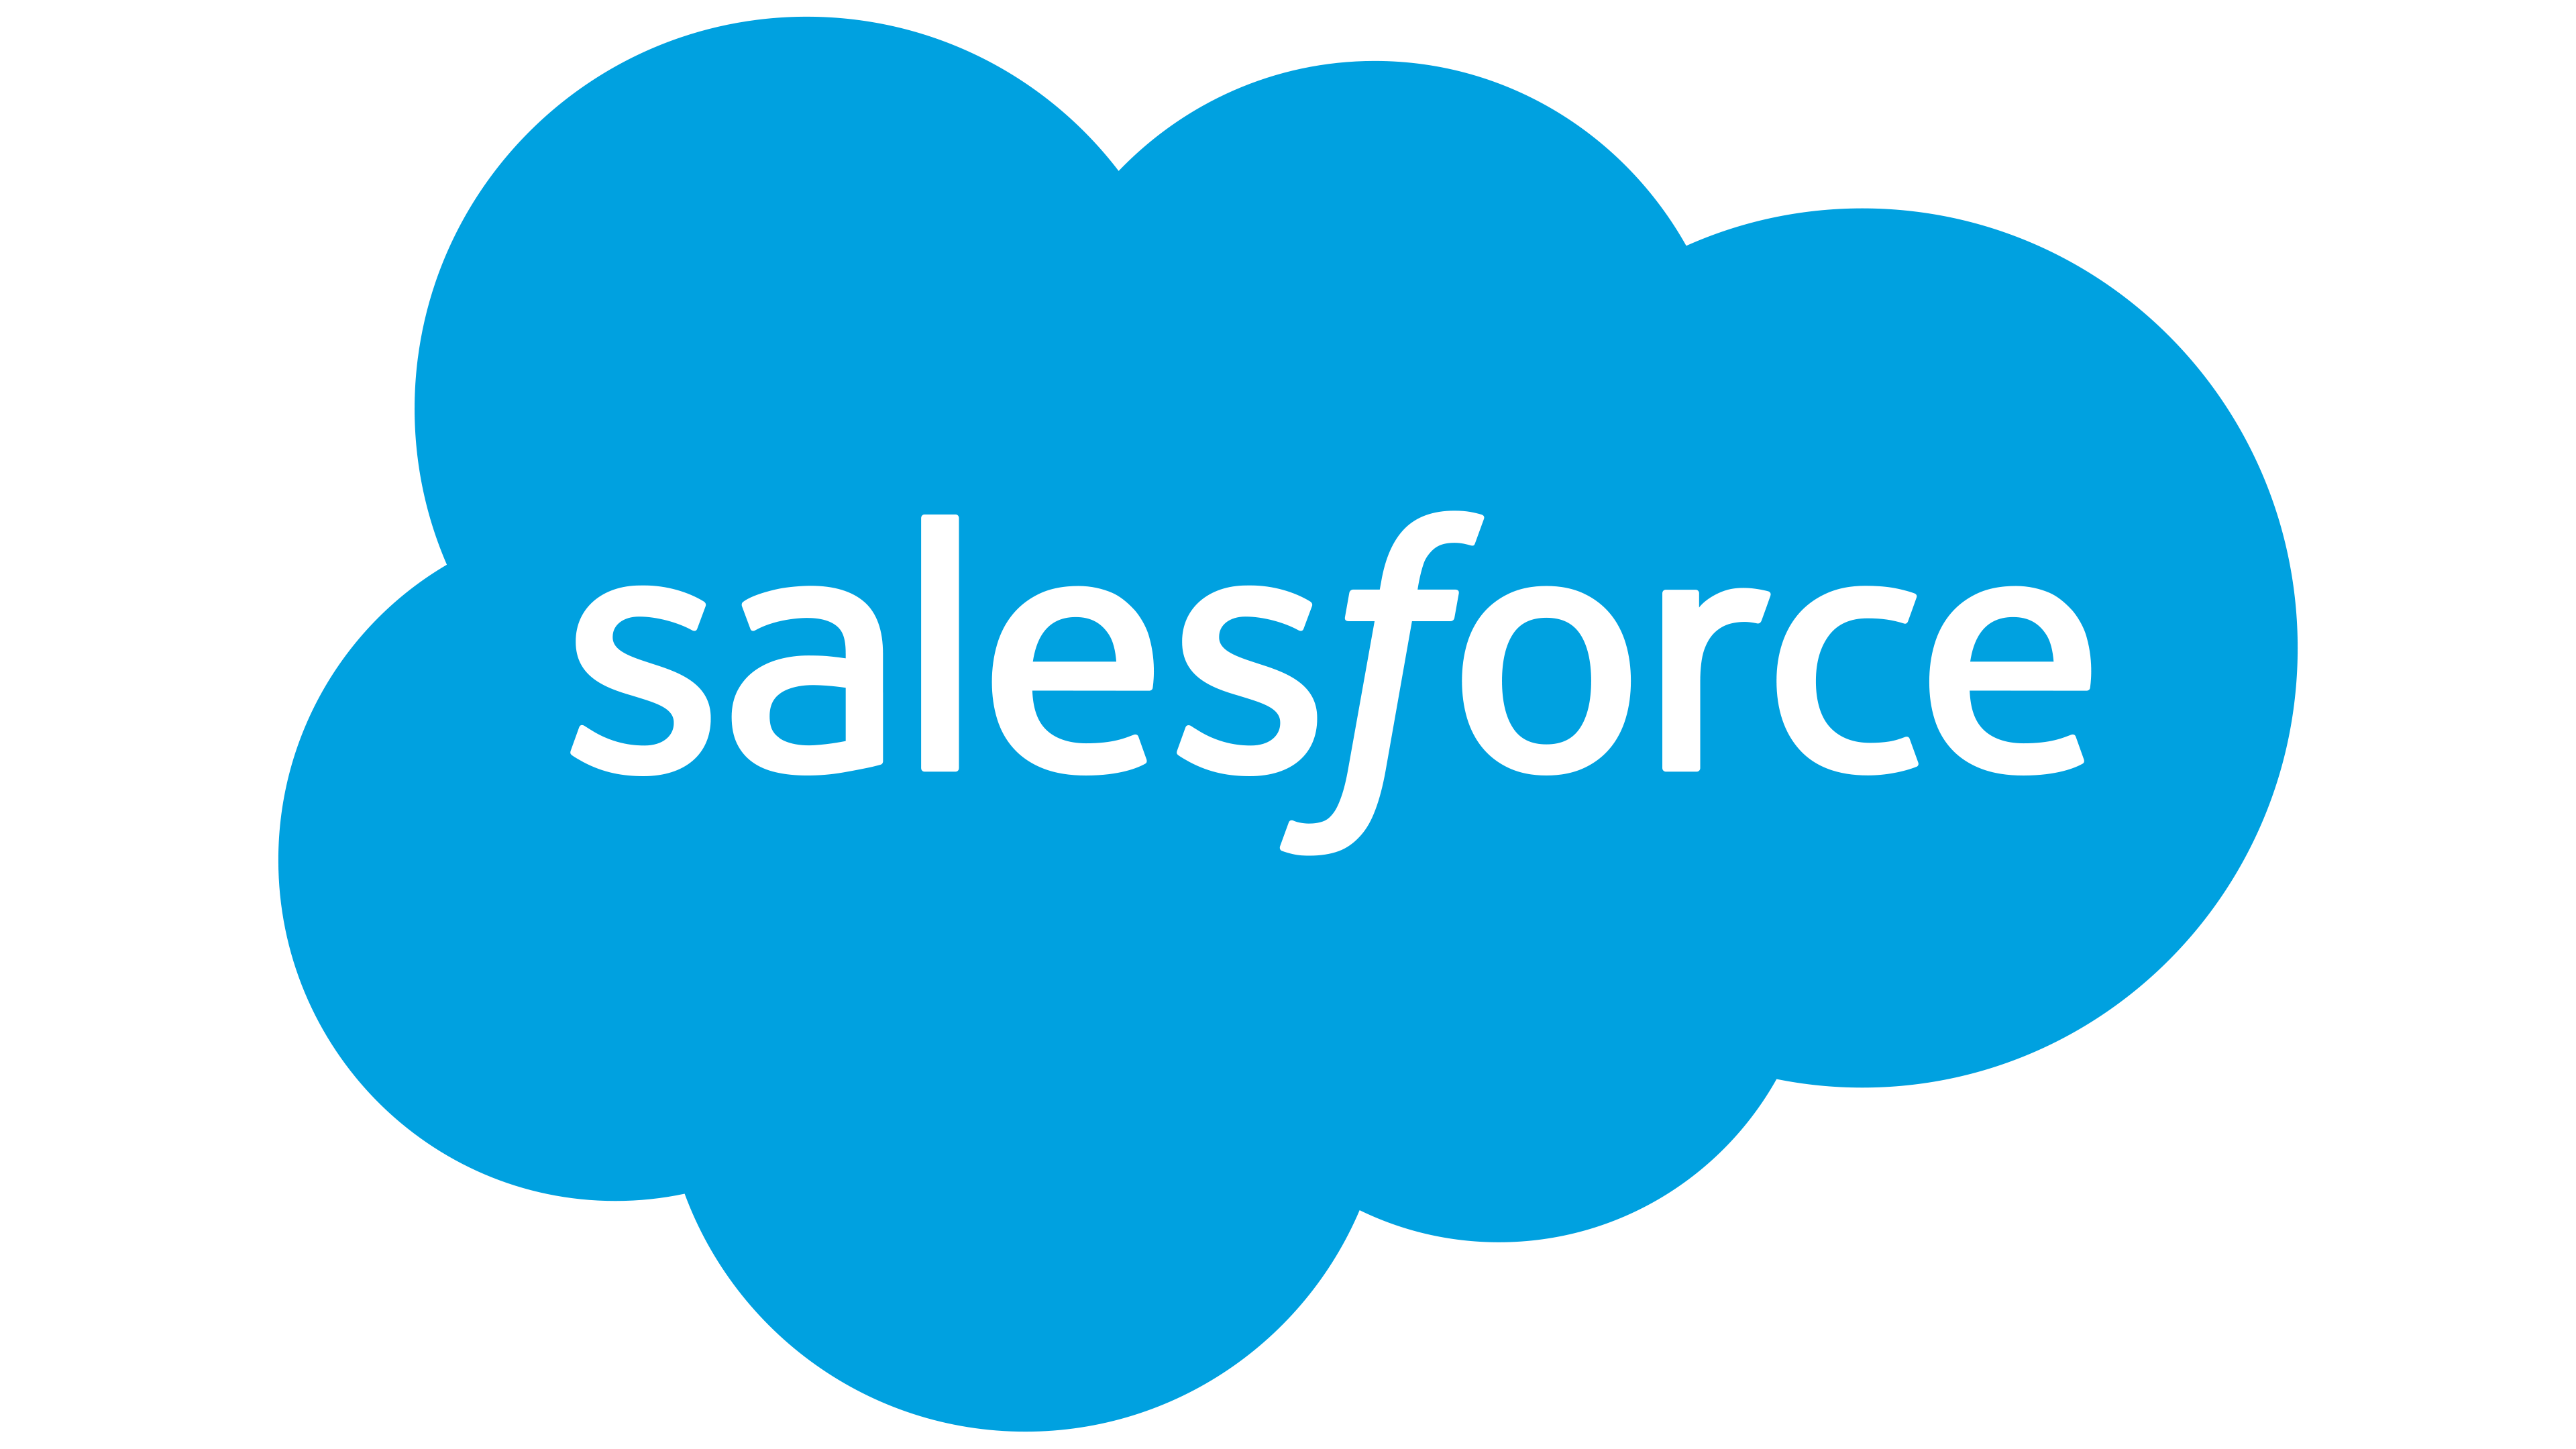 Salesforce-Logo